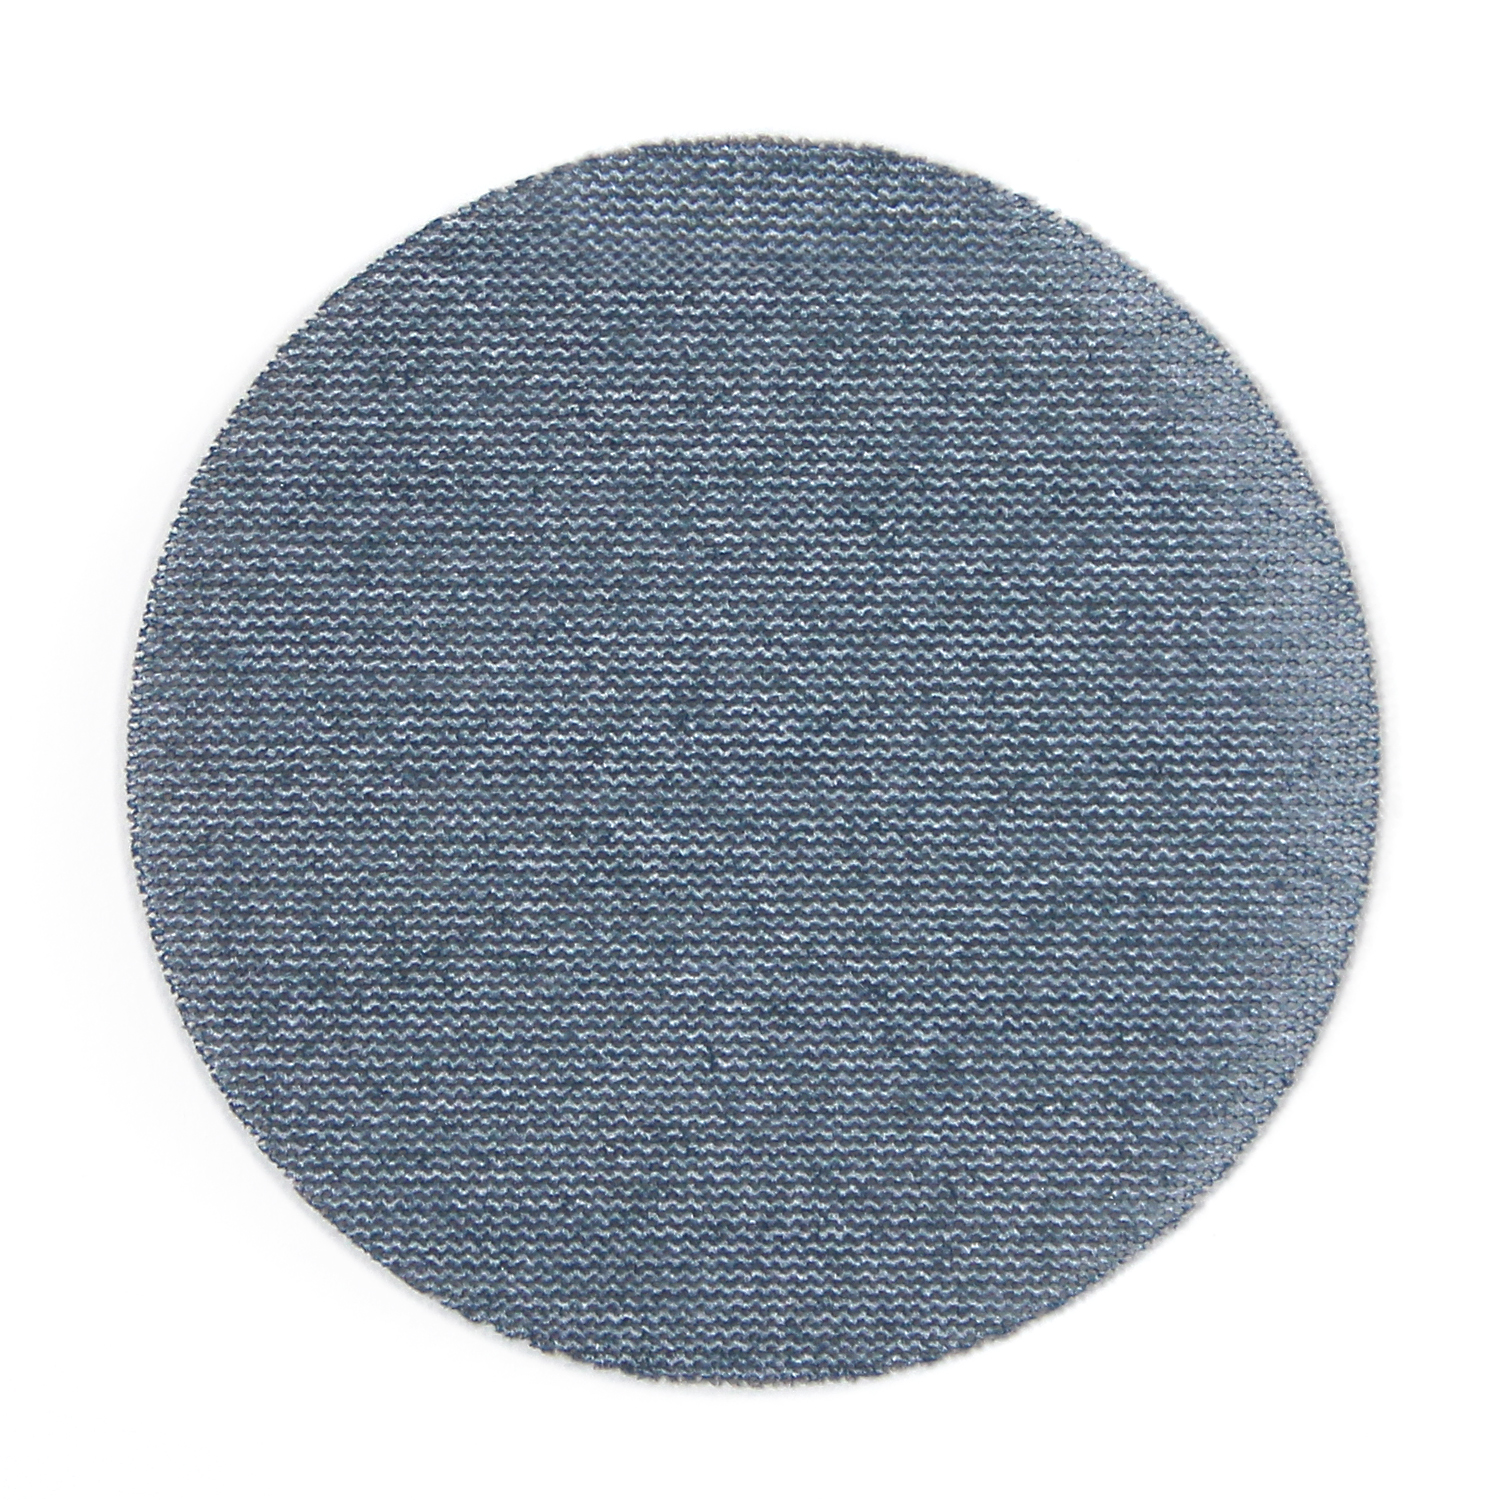 P500 BLUE NET SANDWOX, Ø 150мм,  Круг на сетчатой основе, оксид алюминия